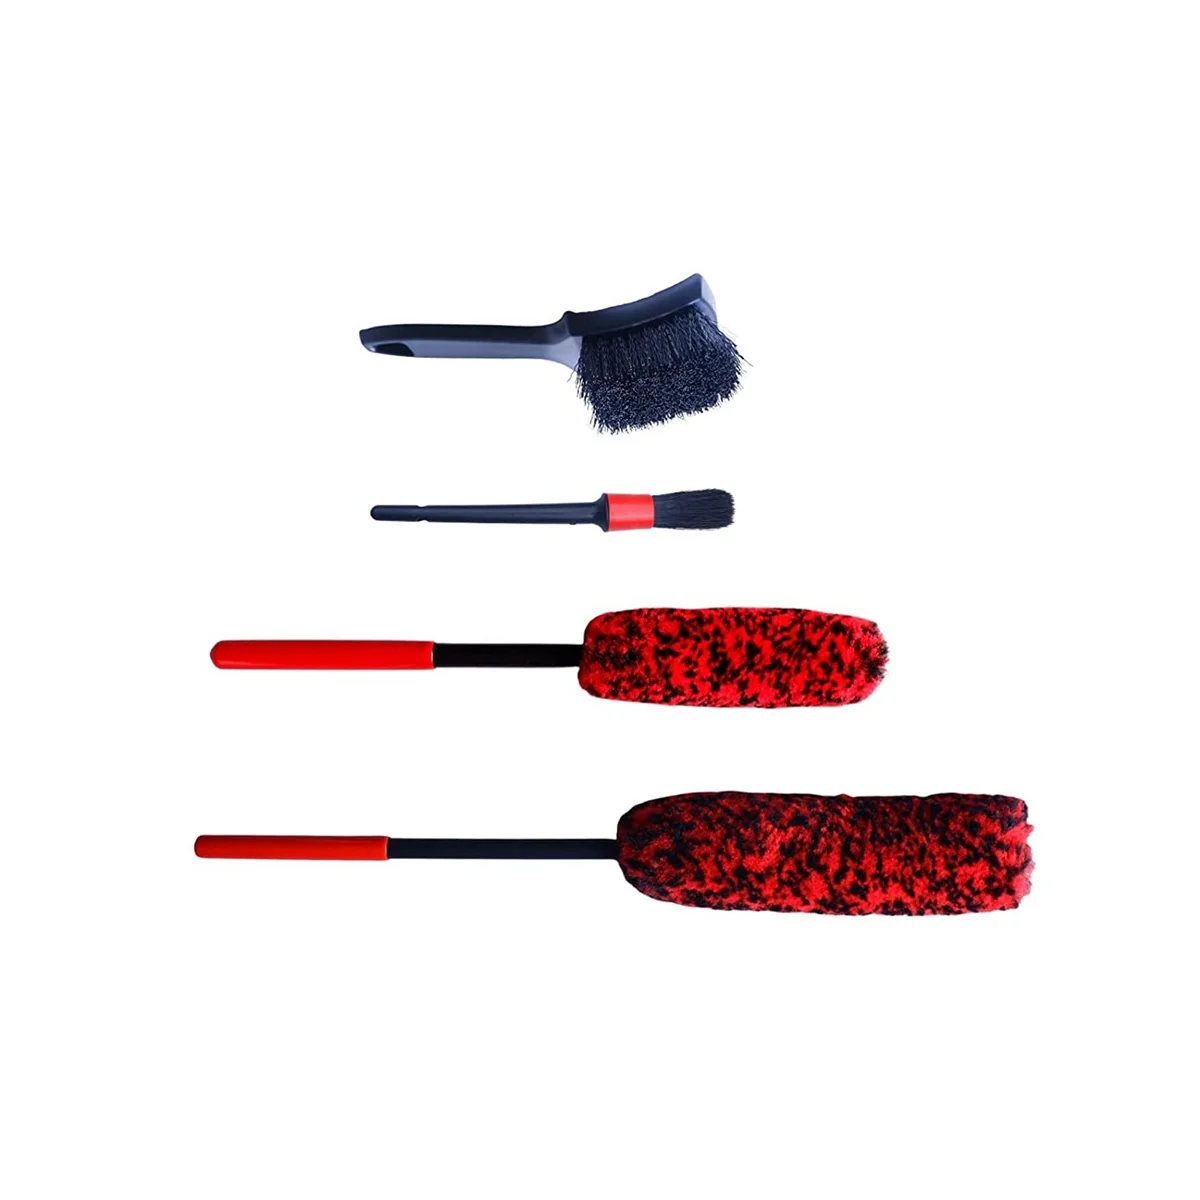 

4 Pack Wheel Brush Kit for Cleaning Wheel and Tire, Soft Wheel Cleaning Brush, Detailing Brush and Stiff Tire Brush